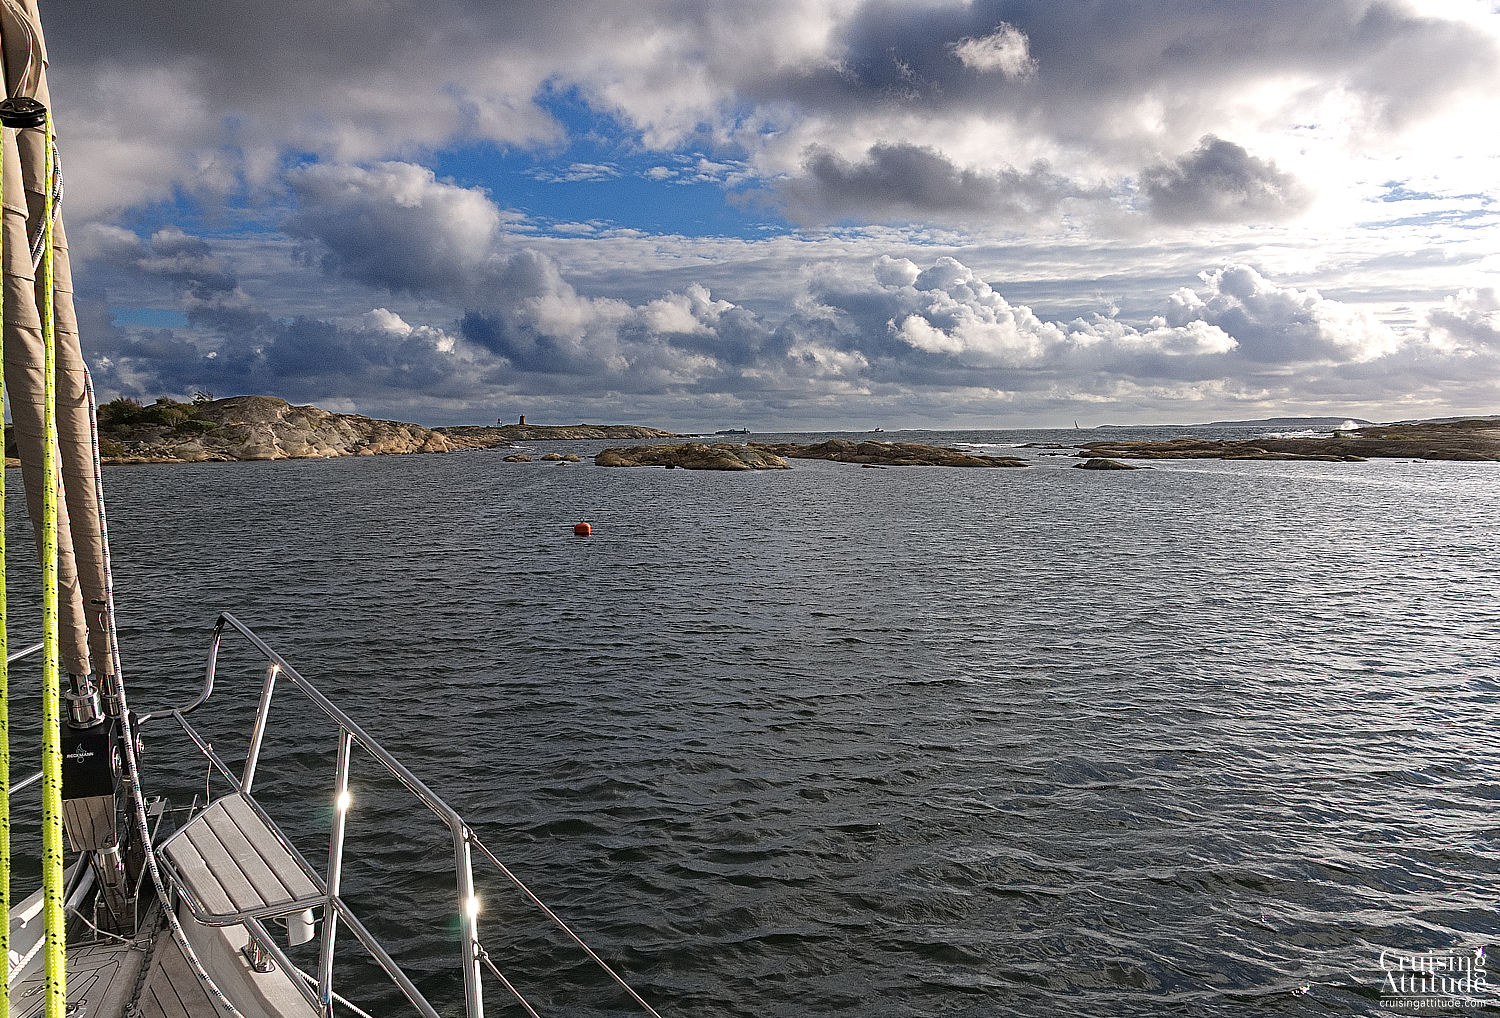 Sailing the Oslofjord - anchorage at Hankøhavna | Cruising Attitude Sailing Blog | Discovery 55